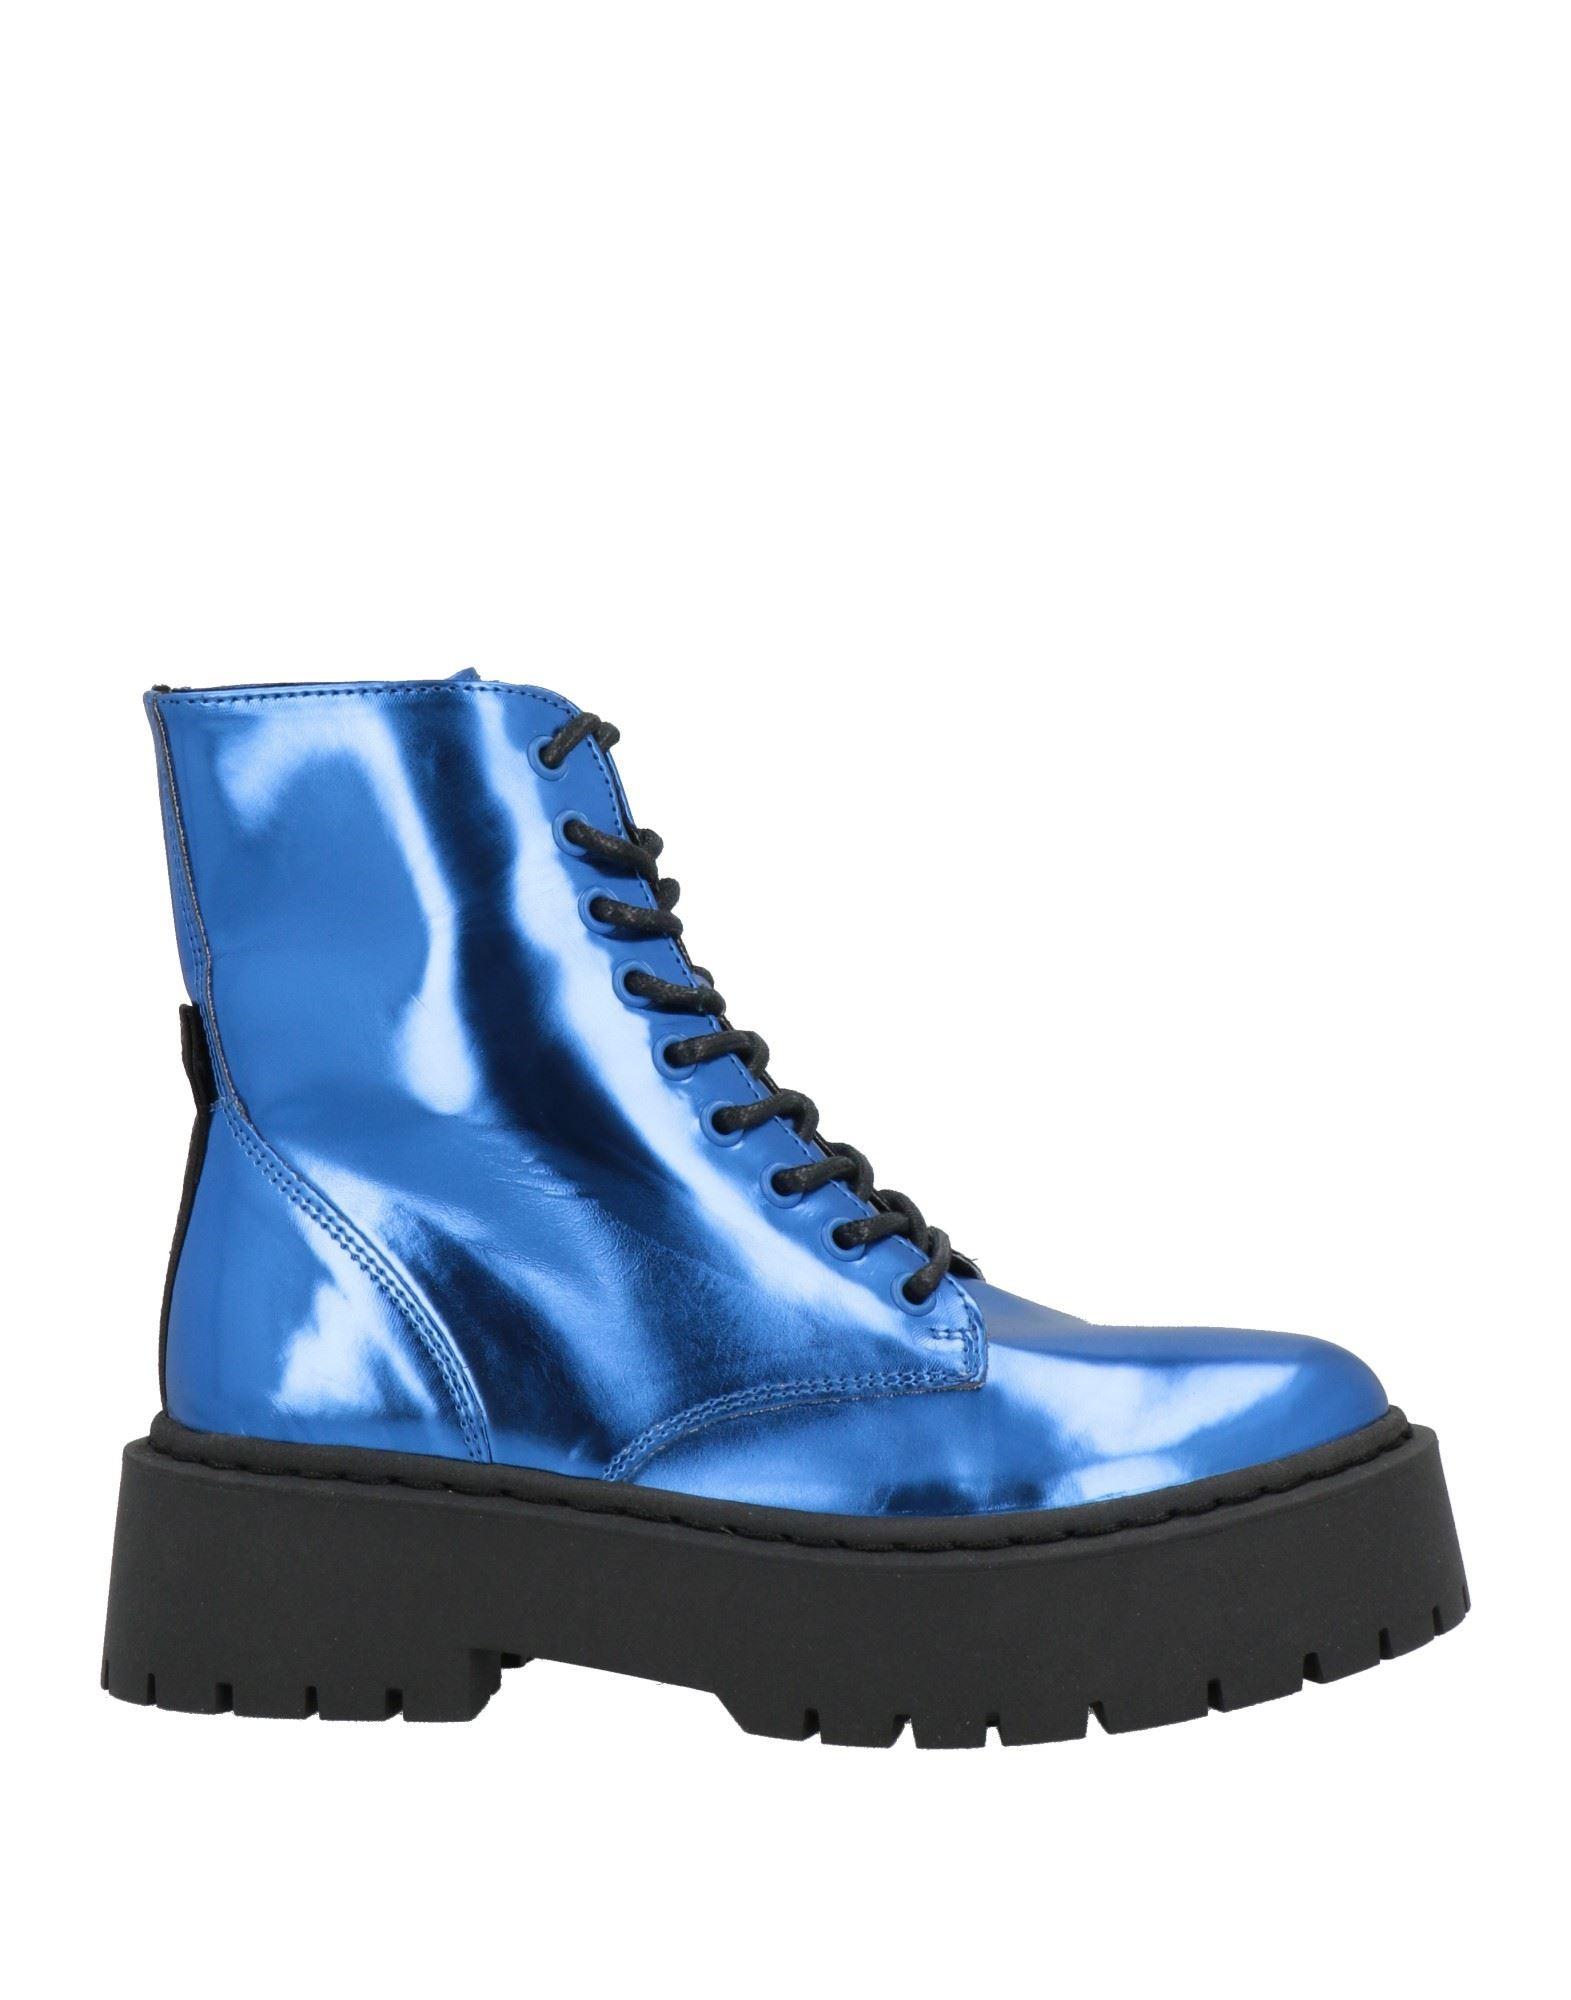 Steve Madden Ankle Boots in Blue | Lyst Australia